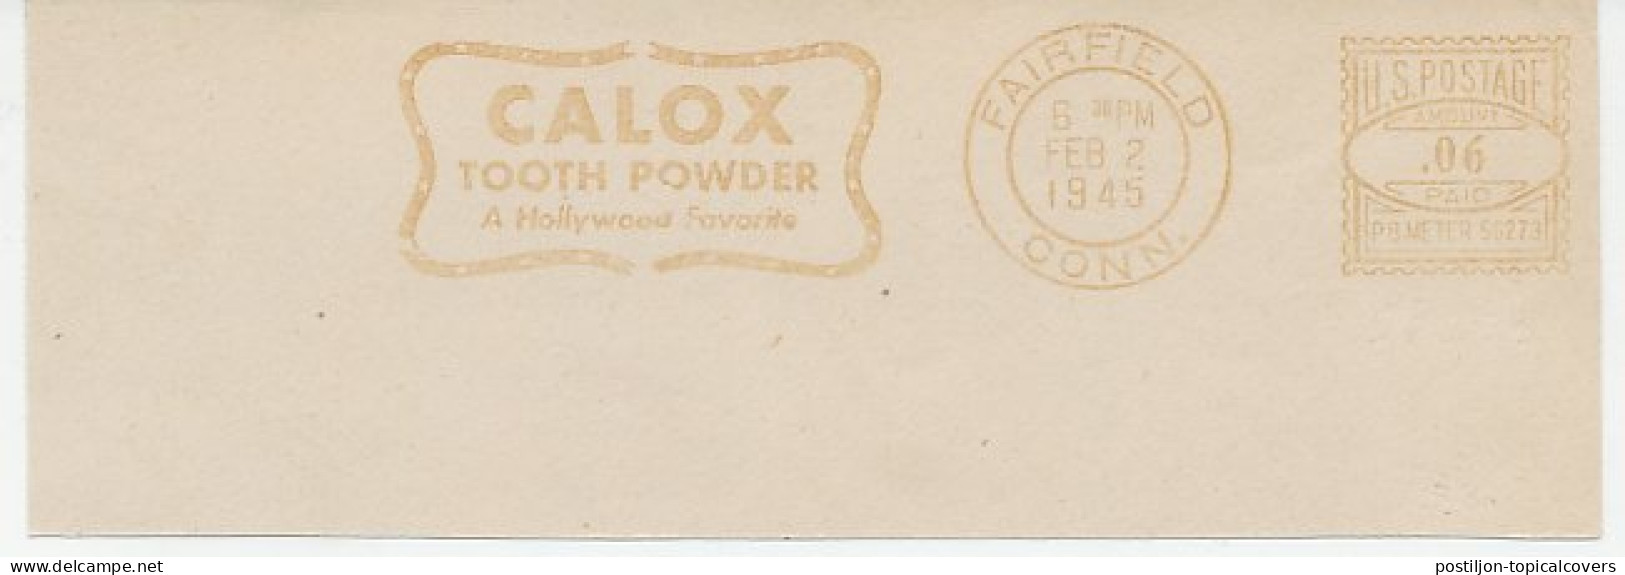 Meter Cut USA 1945 Tooth Powder - Calox - Geneeskunde